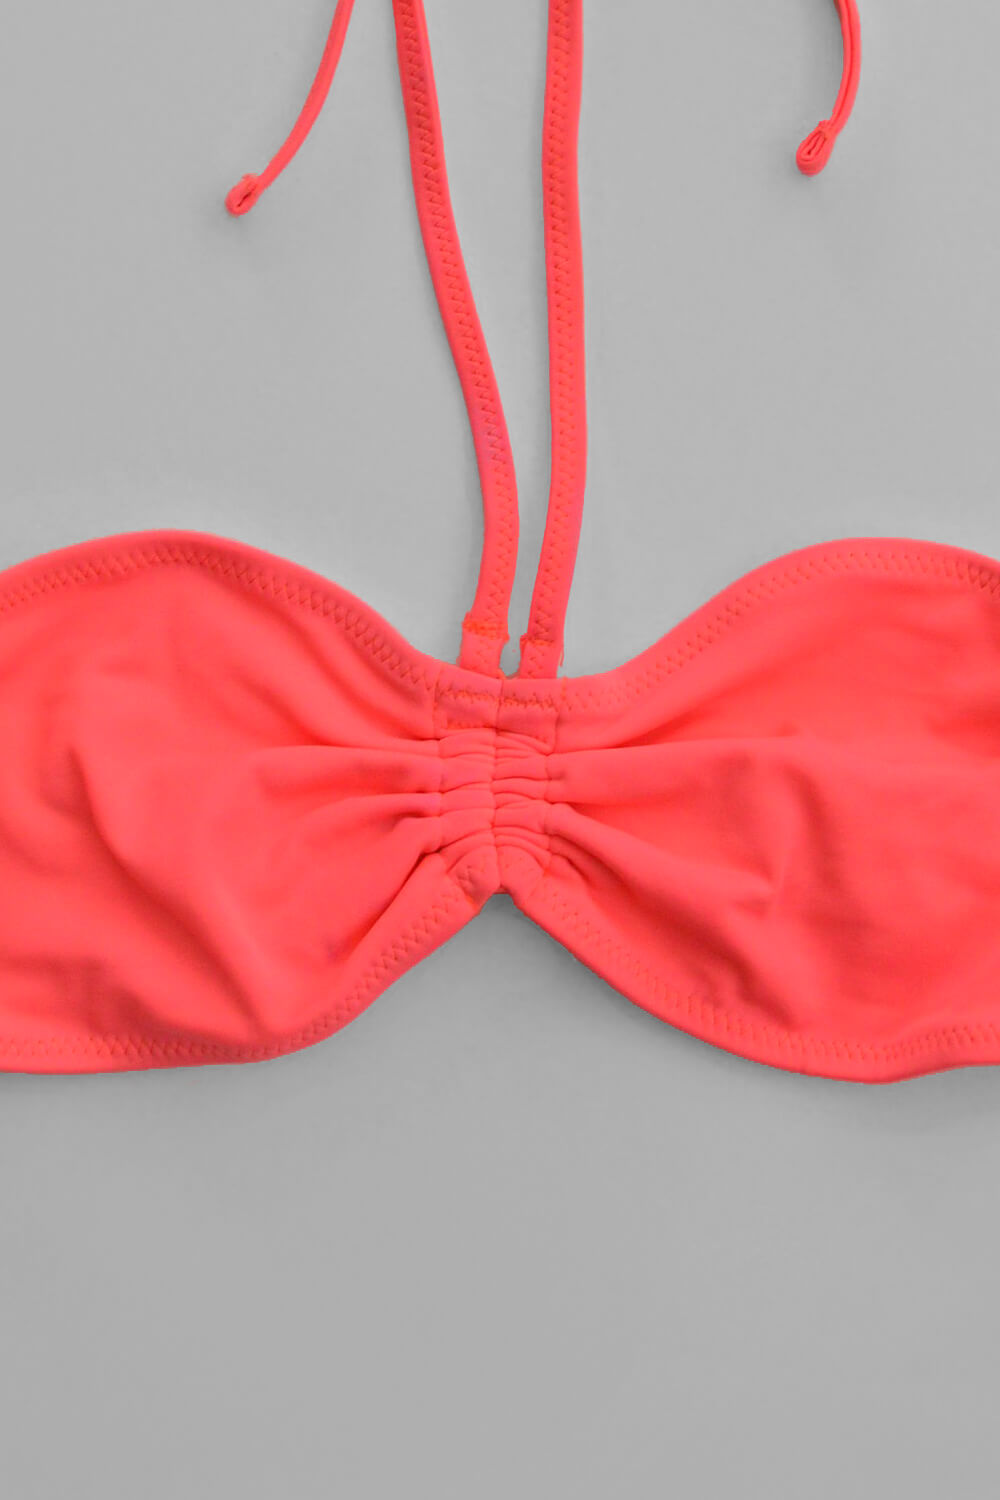 bandeau halter bikini top - neon pink coral - size small